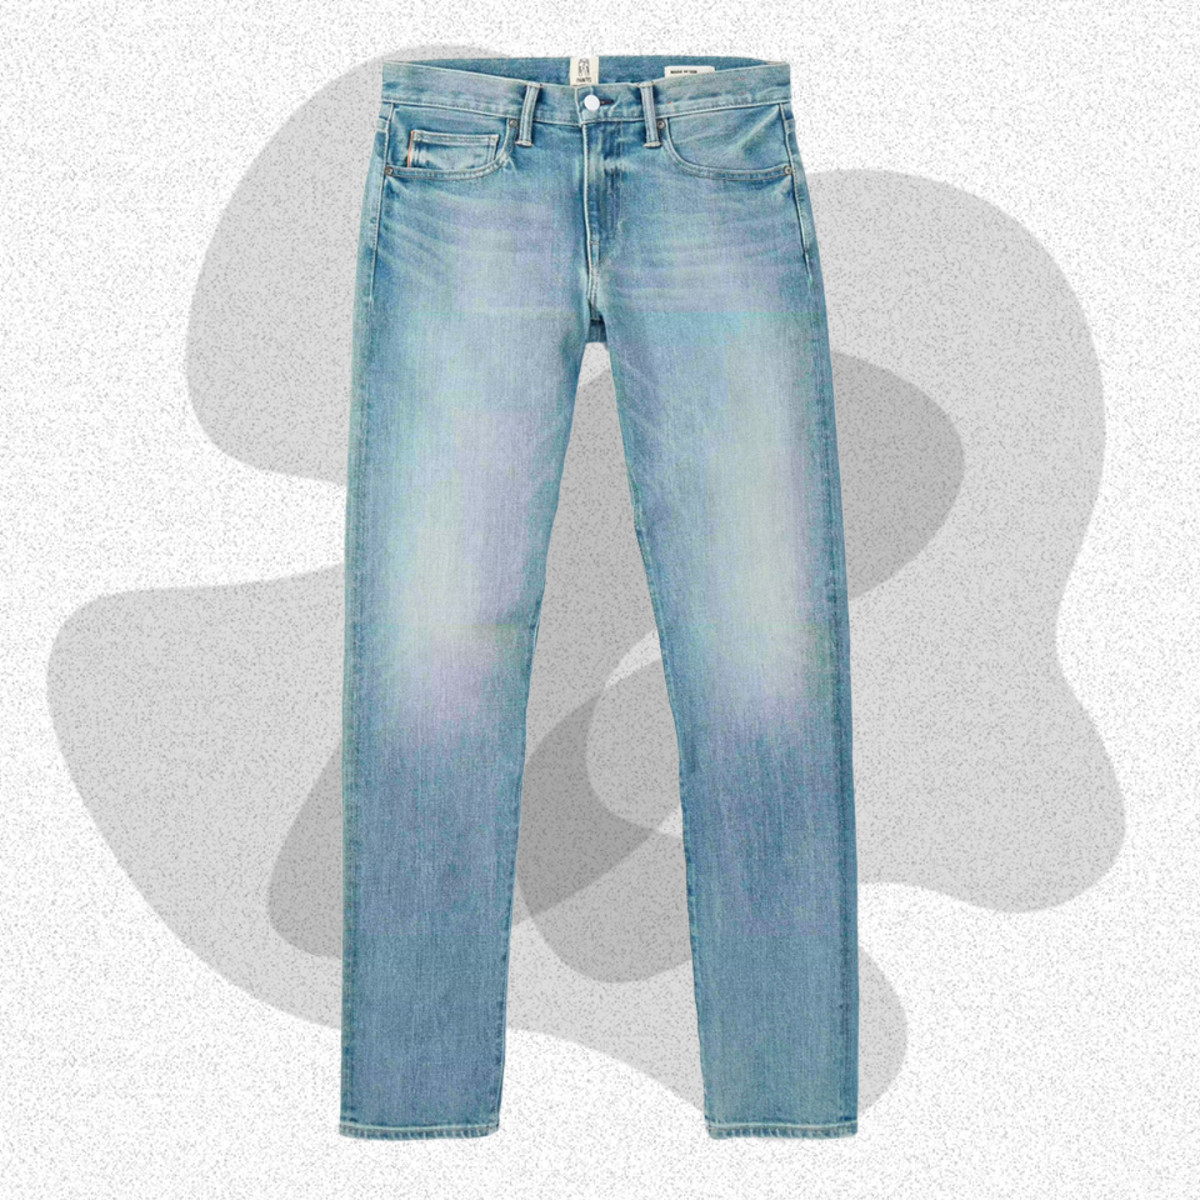 kato the pen slim 14oz 4 way stretch selvedge denim jeans